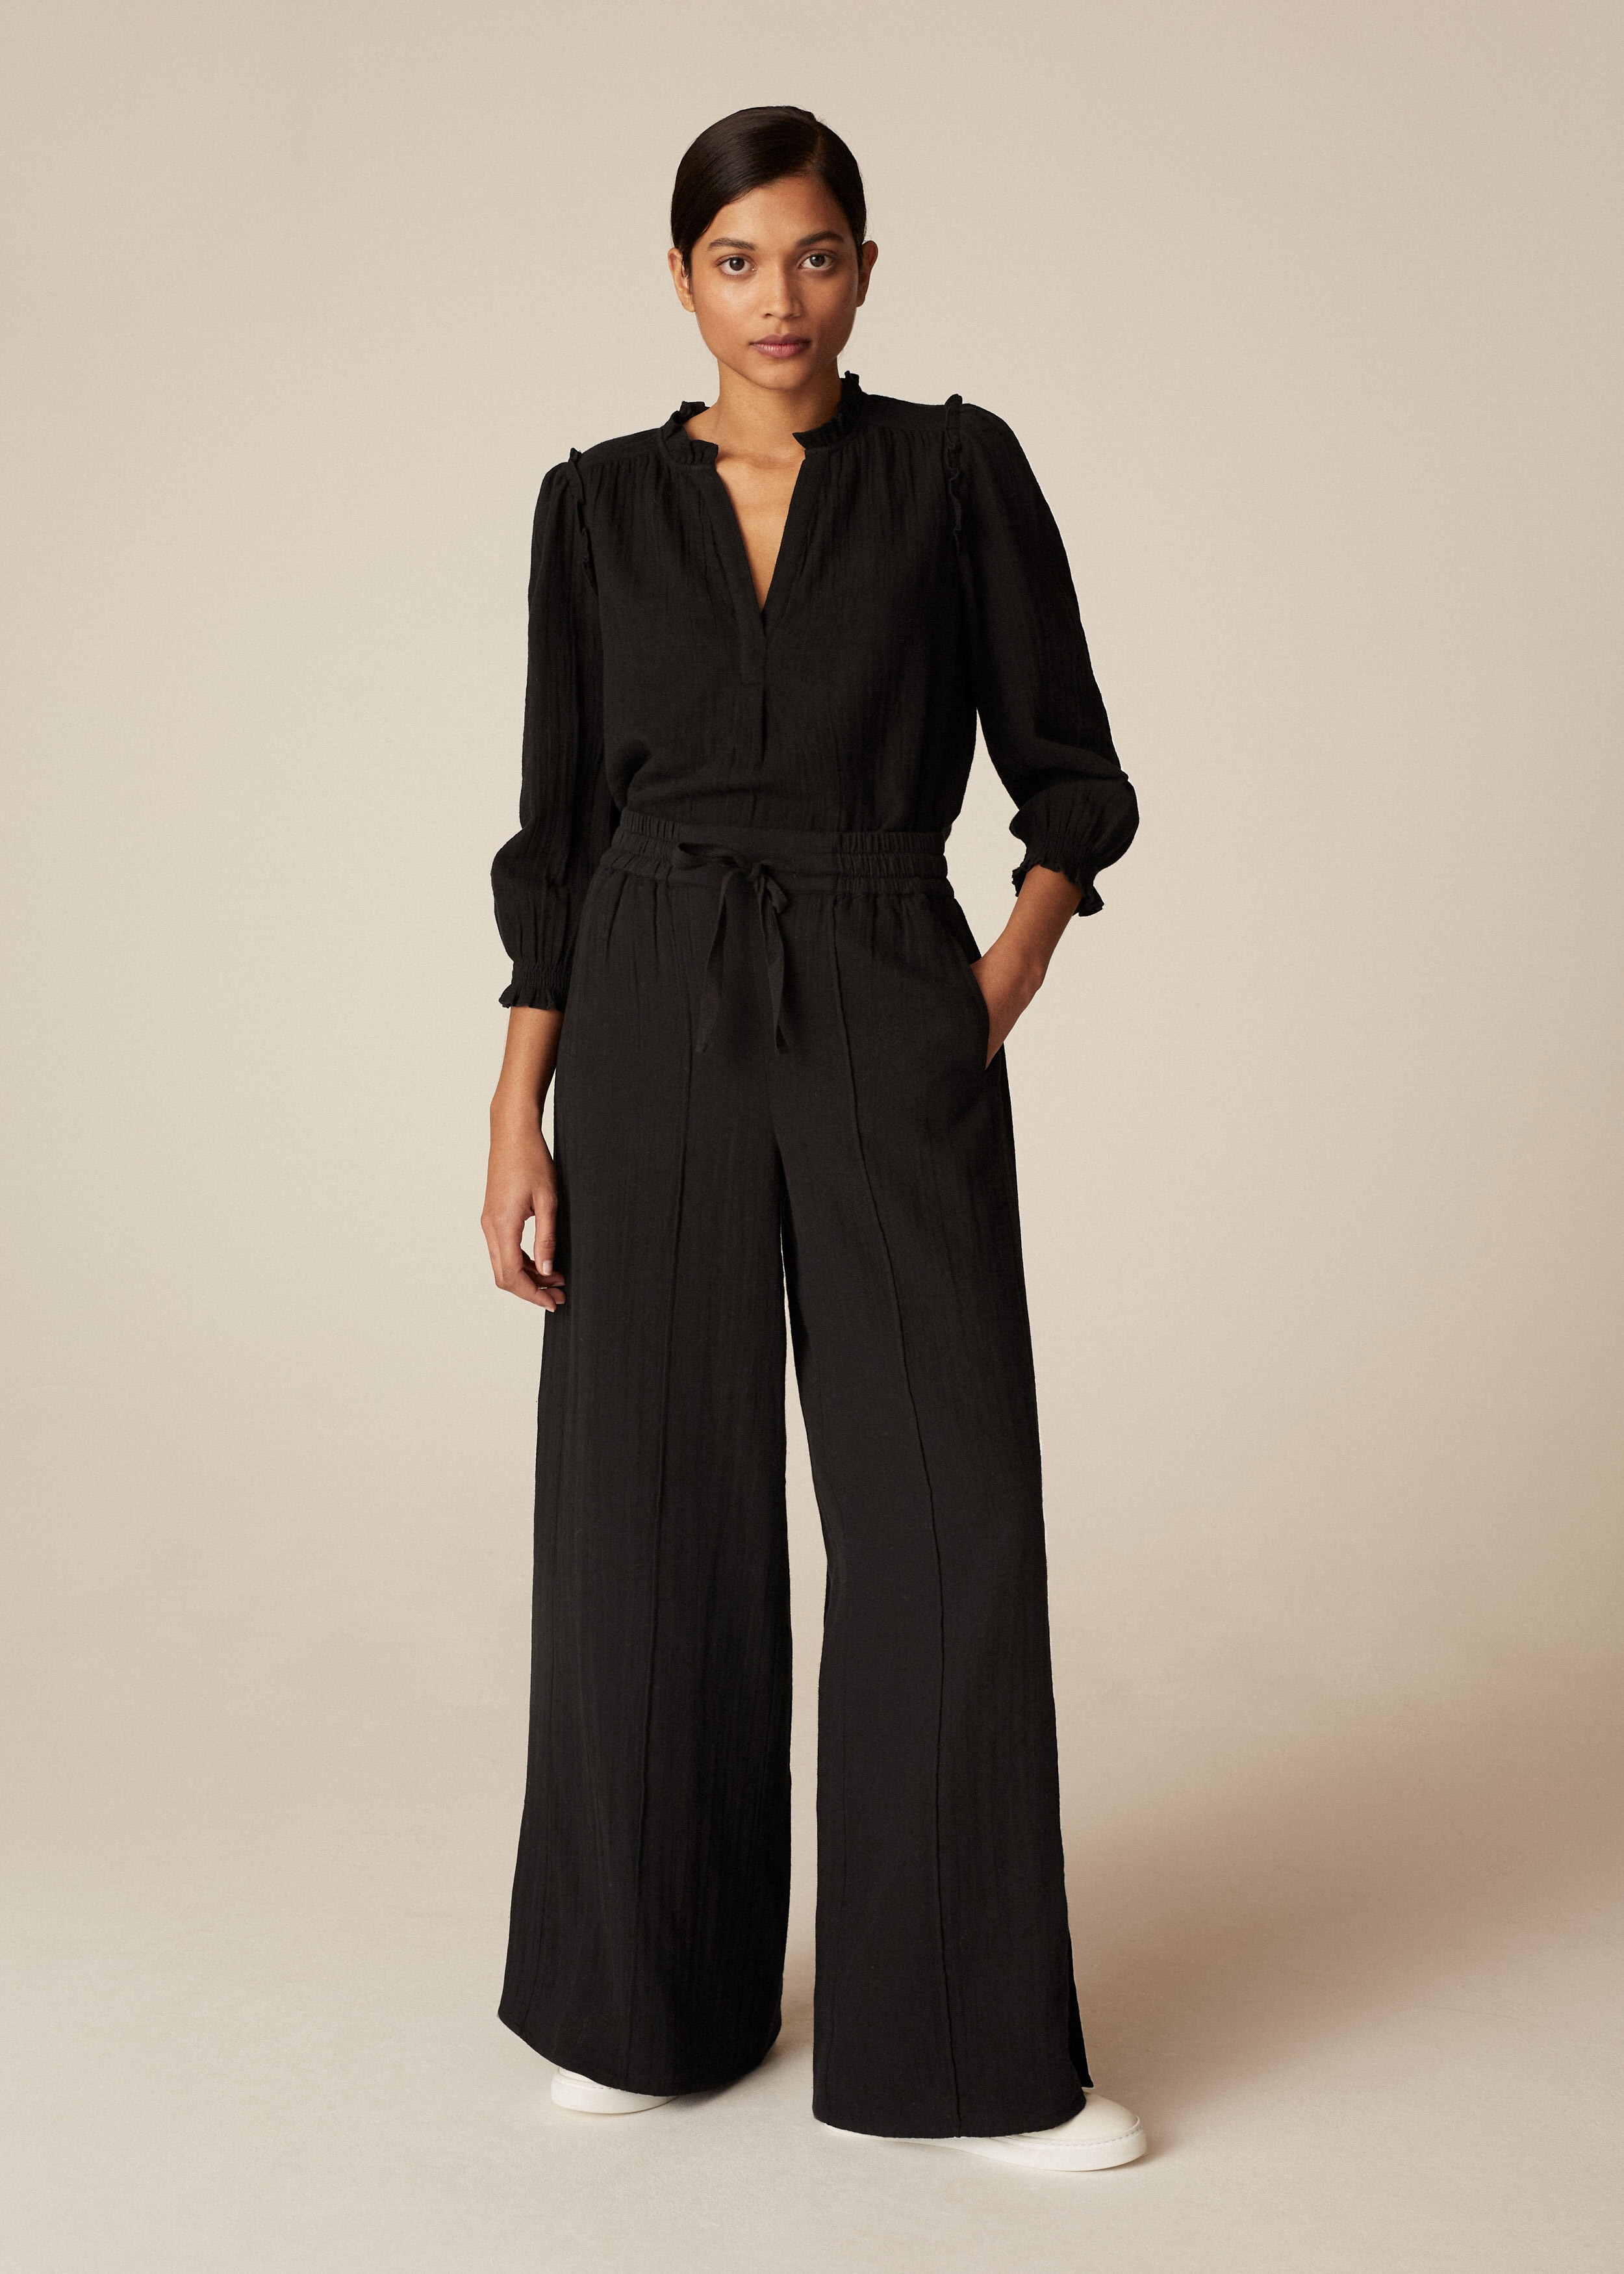 Women's Designer Trousers - Luxury & Stylish Trousers | ME+EM